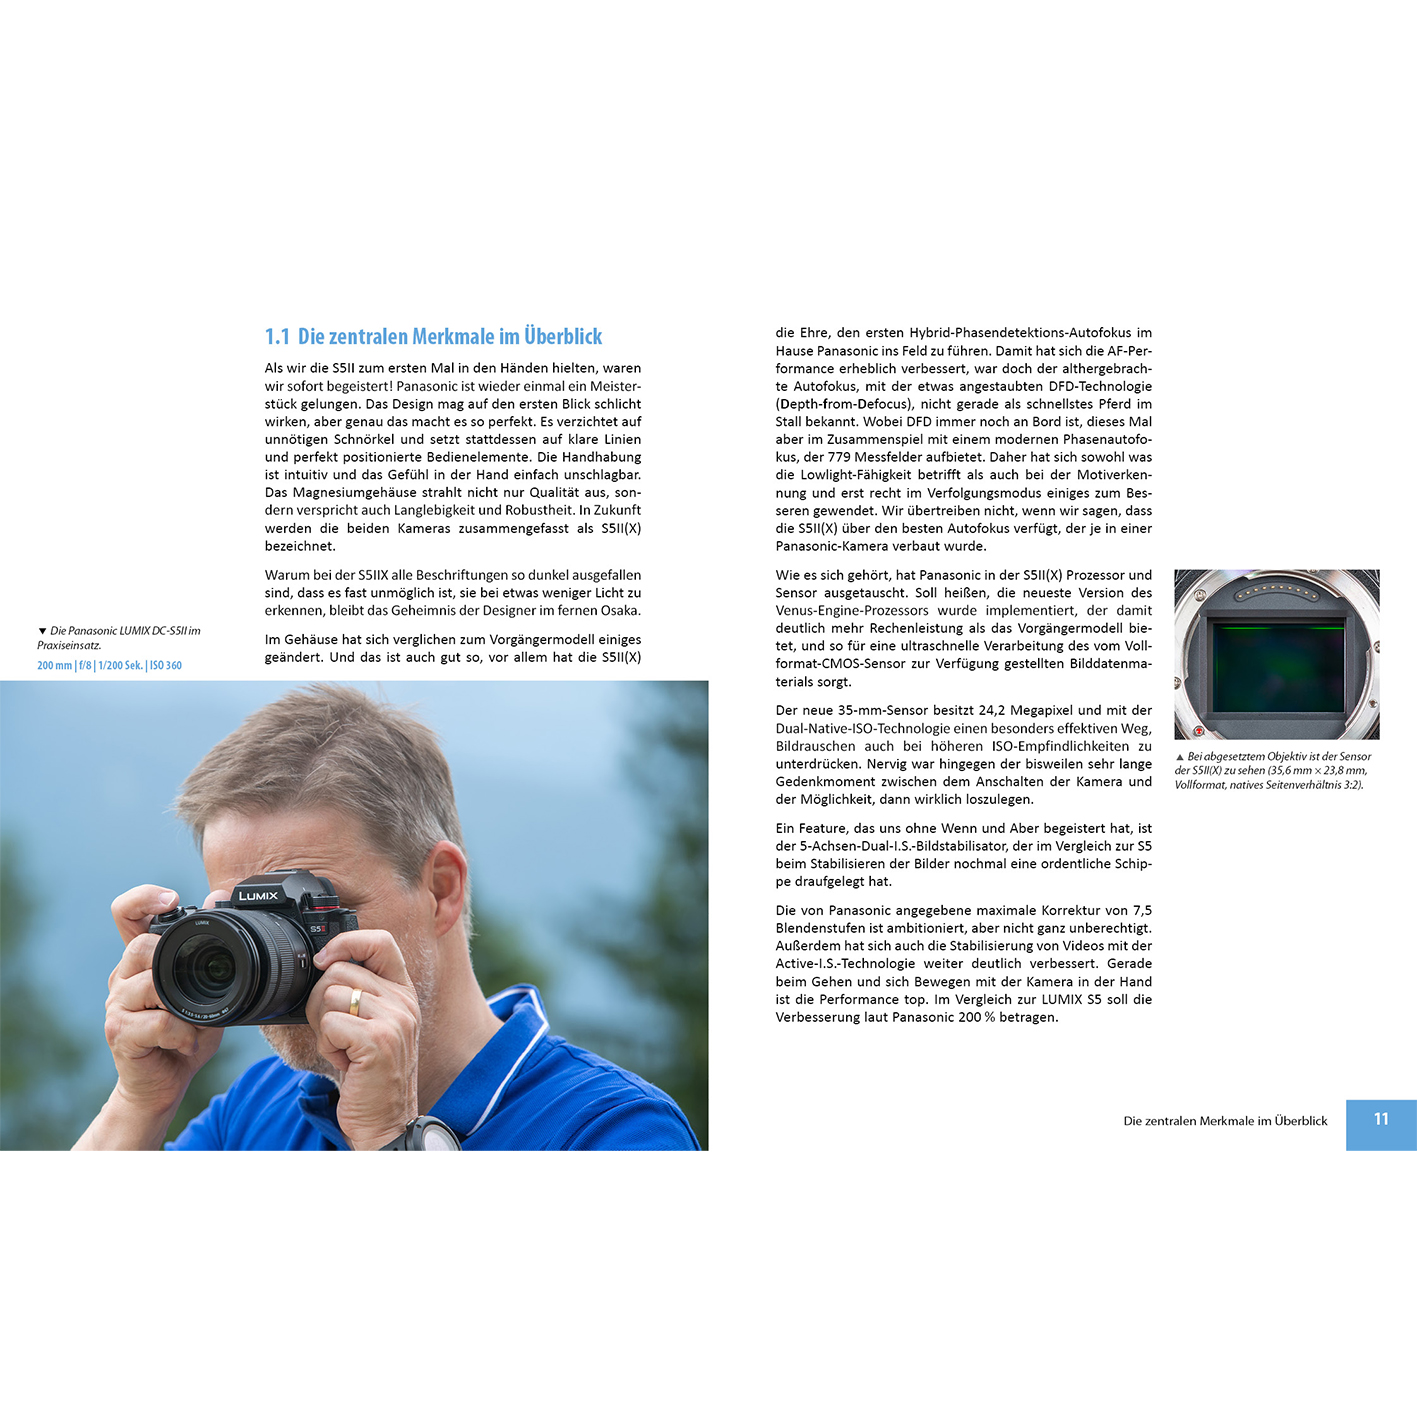 Panasonic Kamera - zu S5II X Praxisbuch Ihrer LUMIX / Das DC-S5II umfangreiche